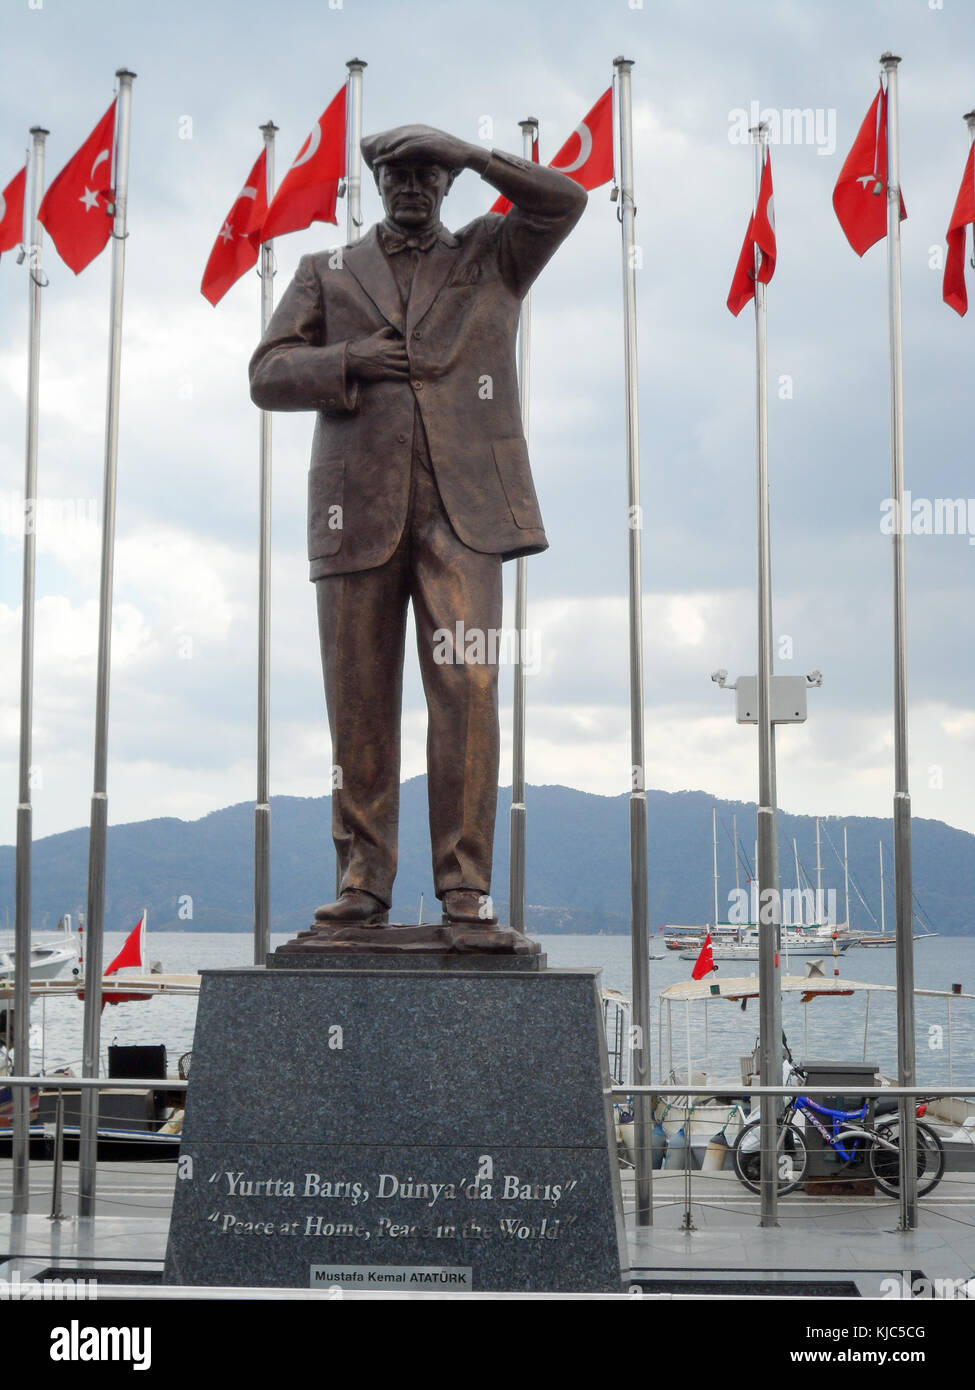 Public statue of Mustafa Kemal Ataturk on the promenade at Marmaris, Turkey. Stock Photo